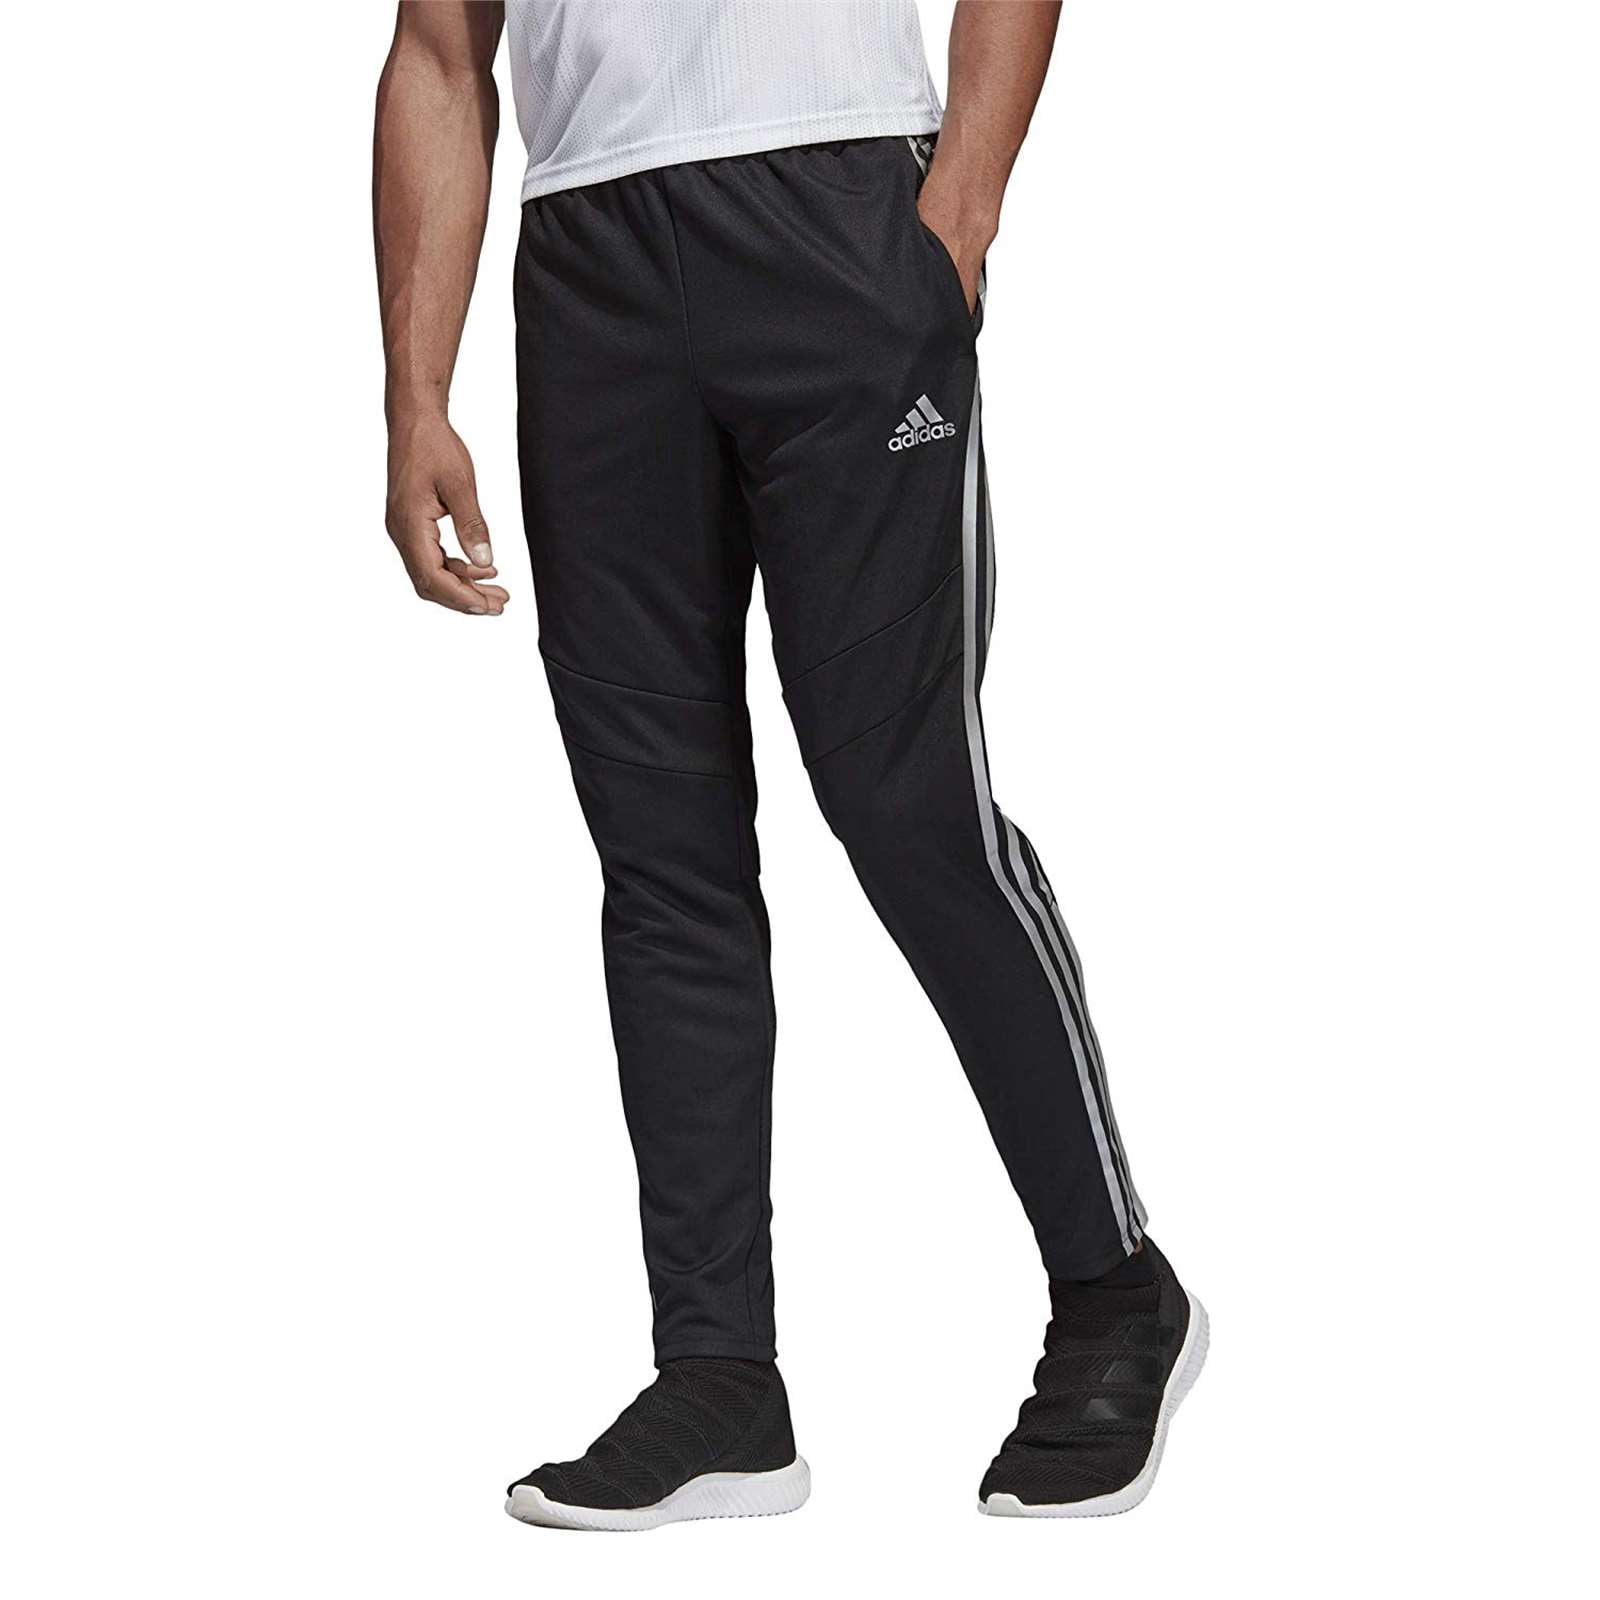 Adidas Tiro Climacool Men's Athletic Workout Training Slim Fit Pants -